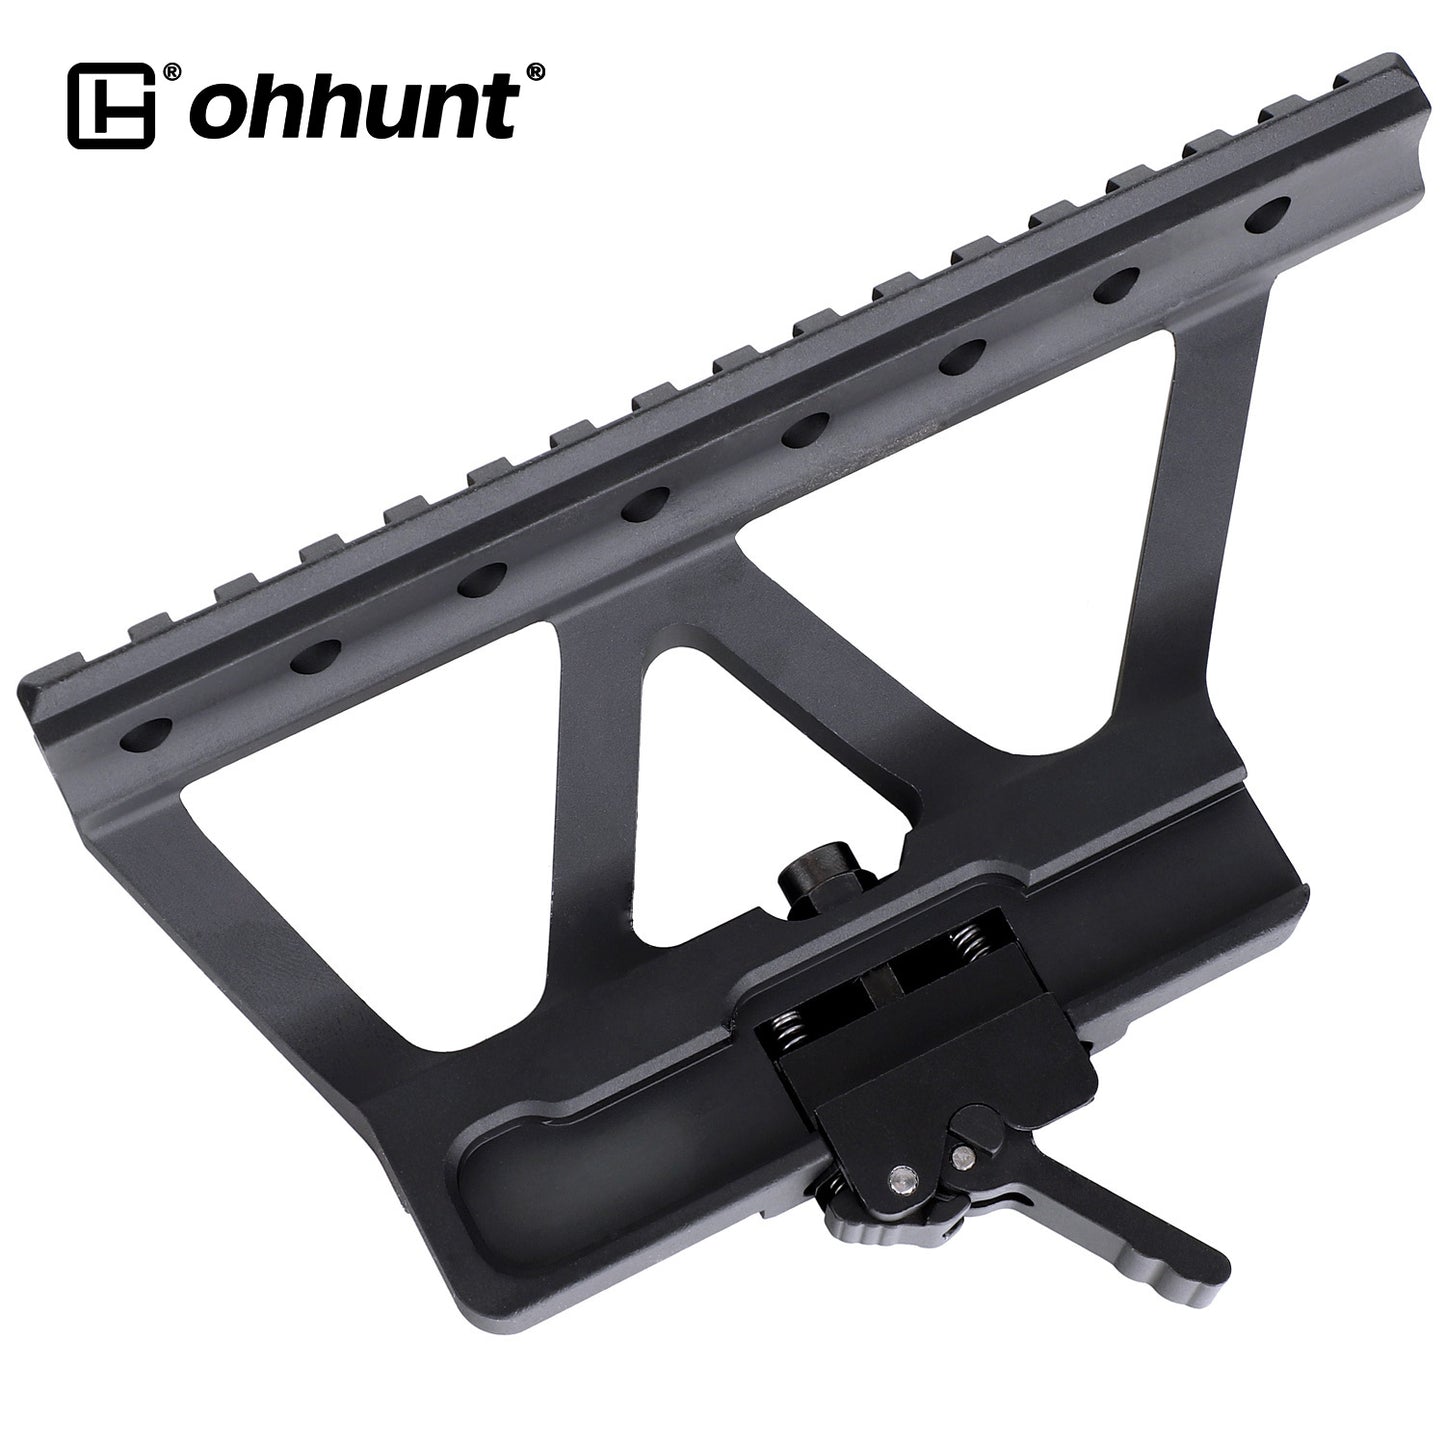 ohhunt AK Side Rail Scope Mount with Quick Detach System Picatinny Rail for AK47 AK74